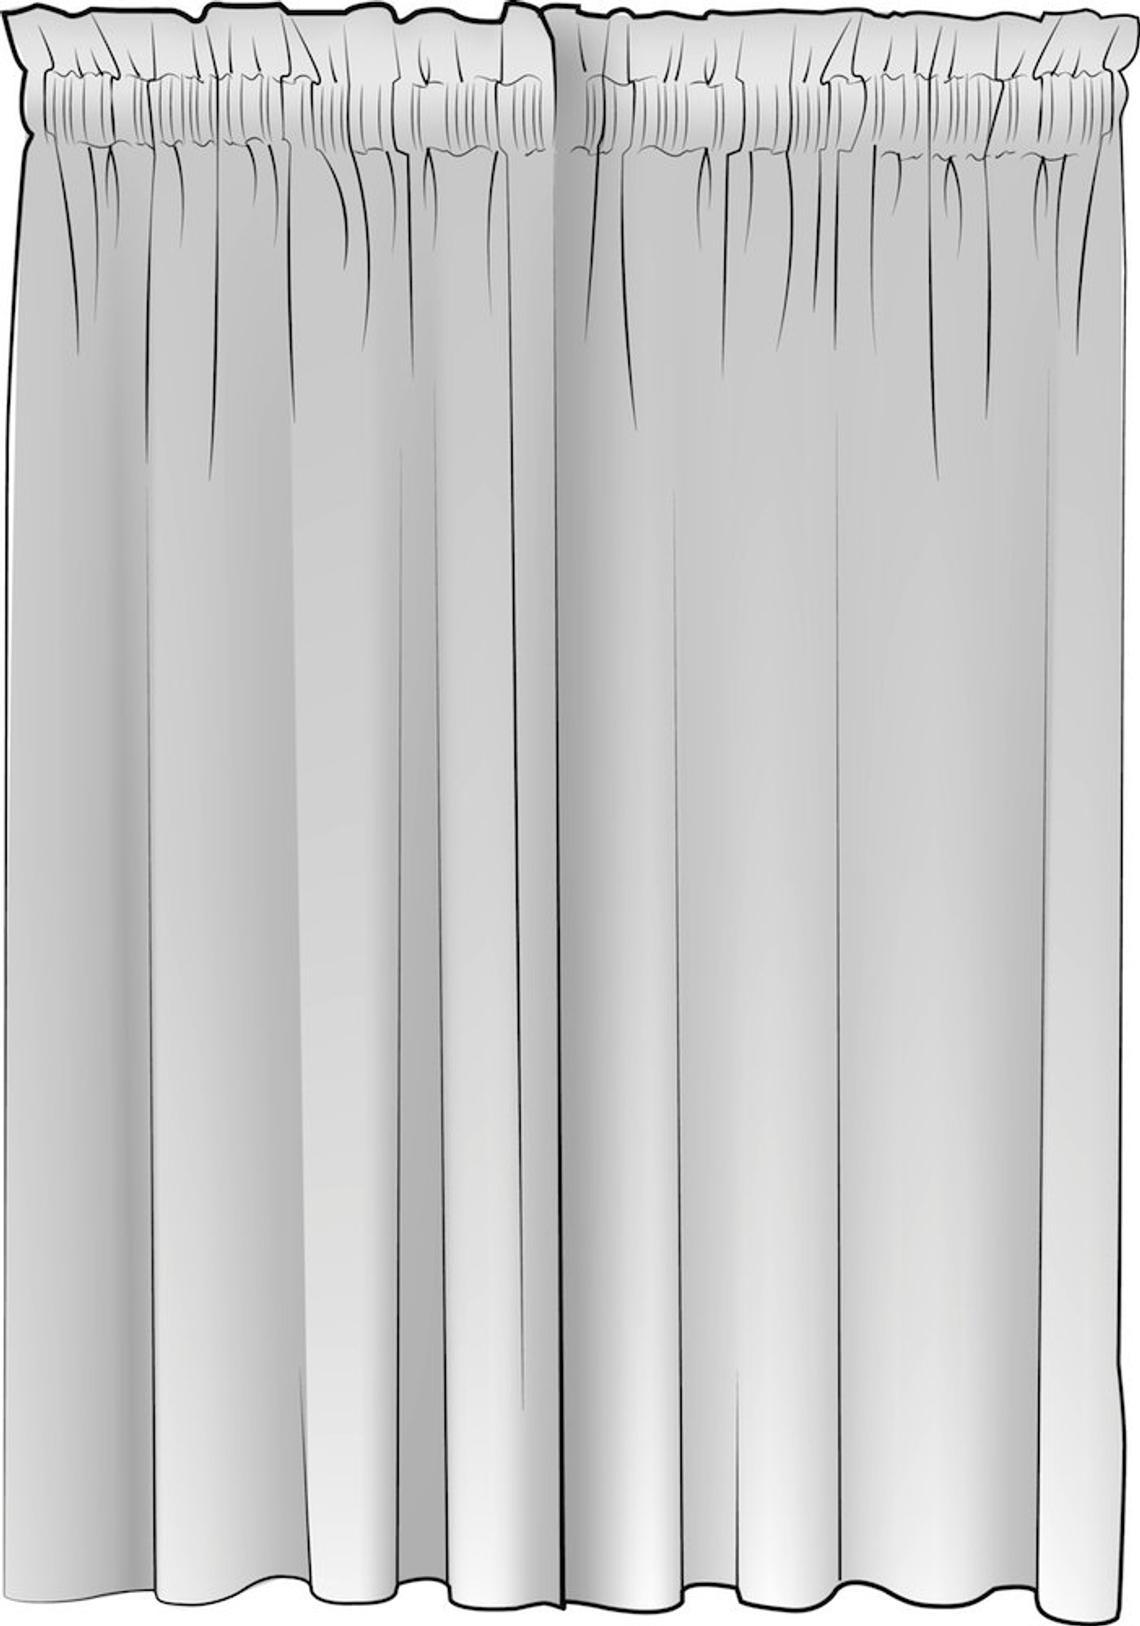 rod pocket curtain panels pair in newbury antique blue stripe- blue, green, white